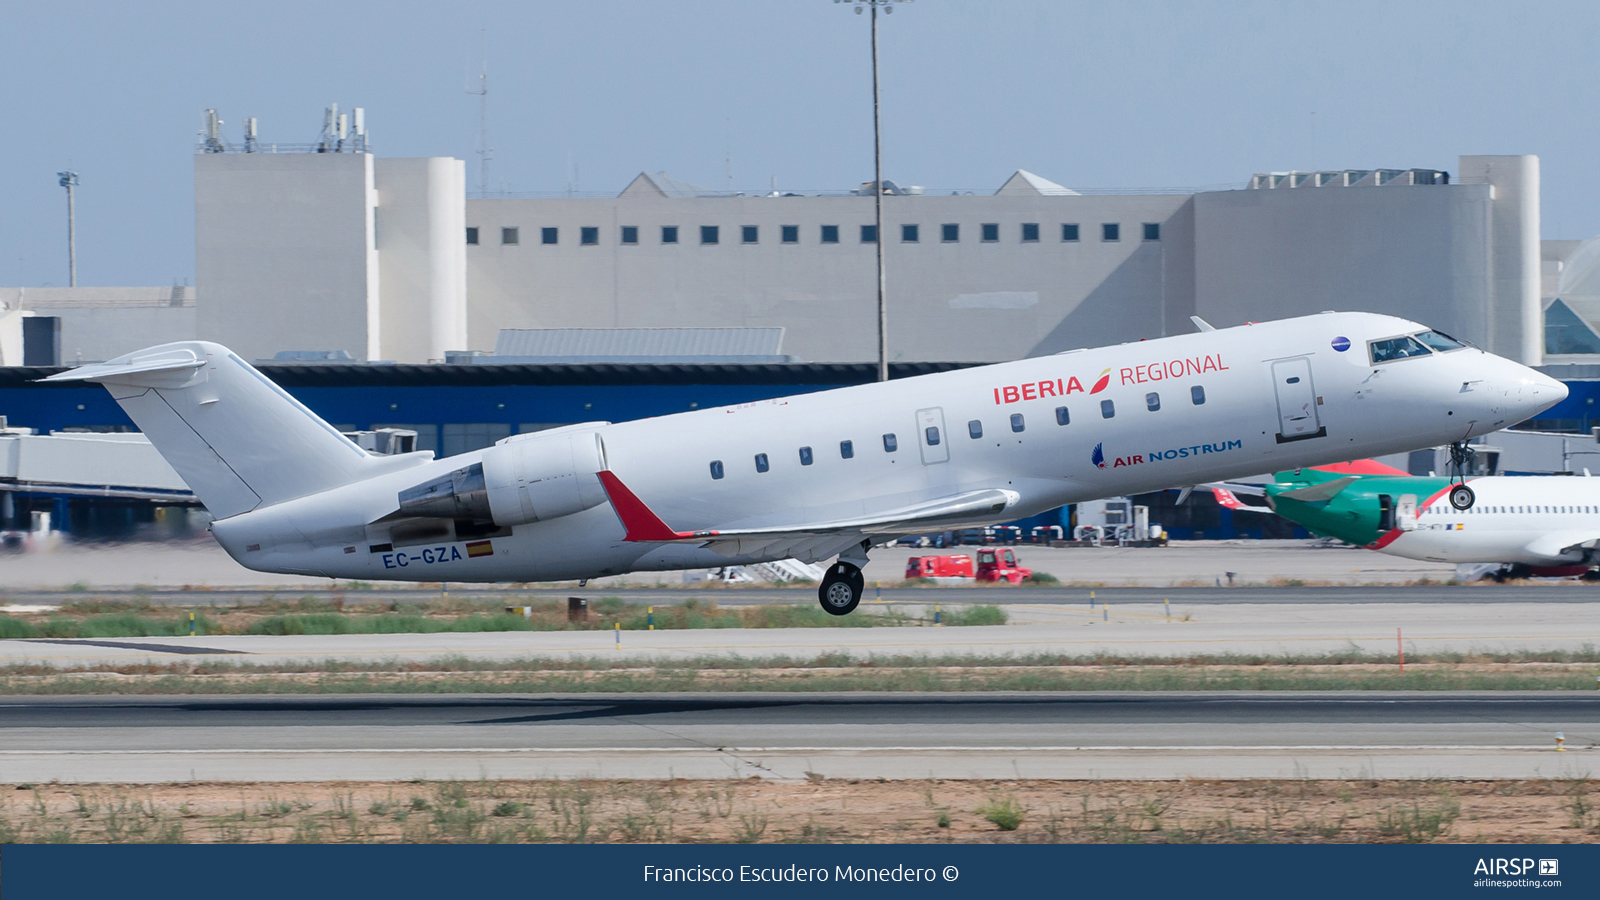 Air Nostrum Iberia Regional  Mitsubishi CRJ-200  EC-GZA